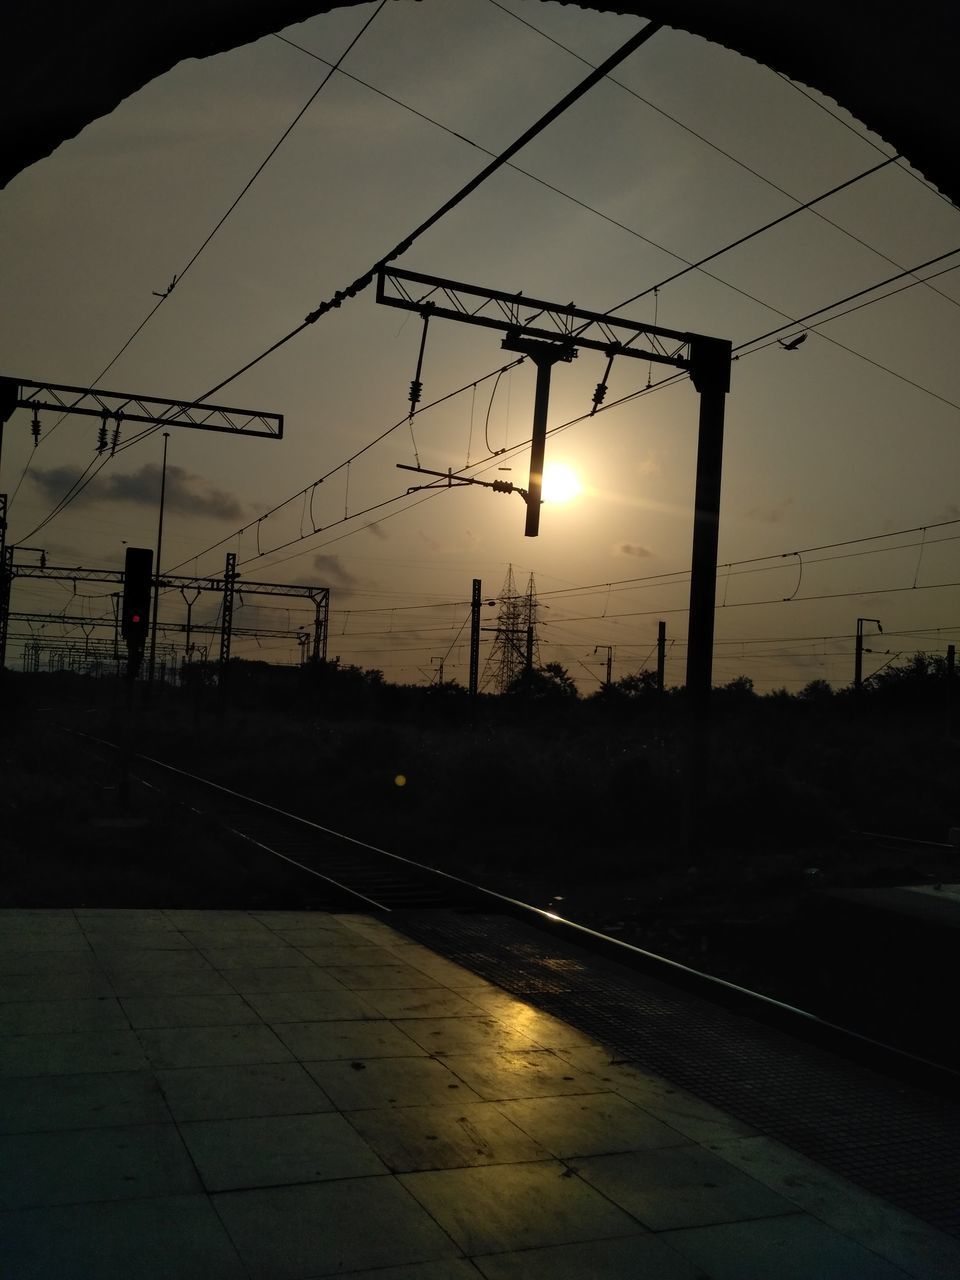 RAILROAD TRACK AT SUNSET